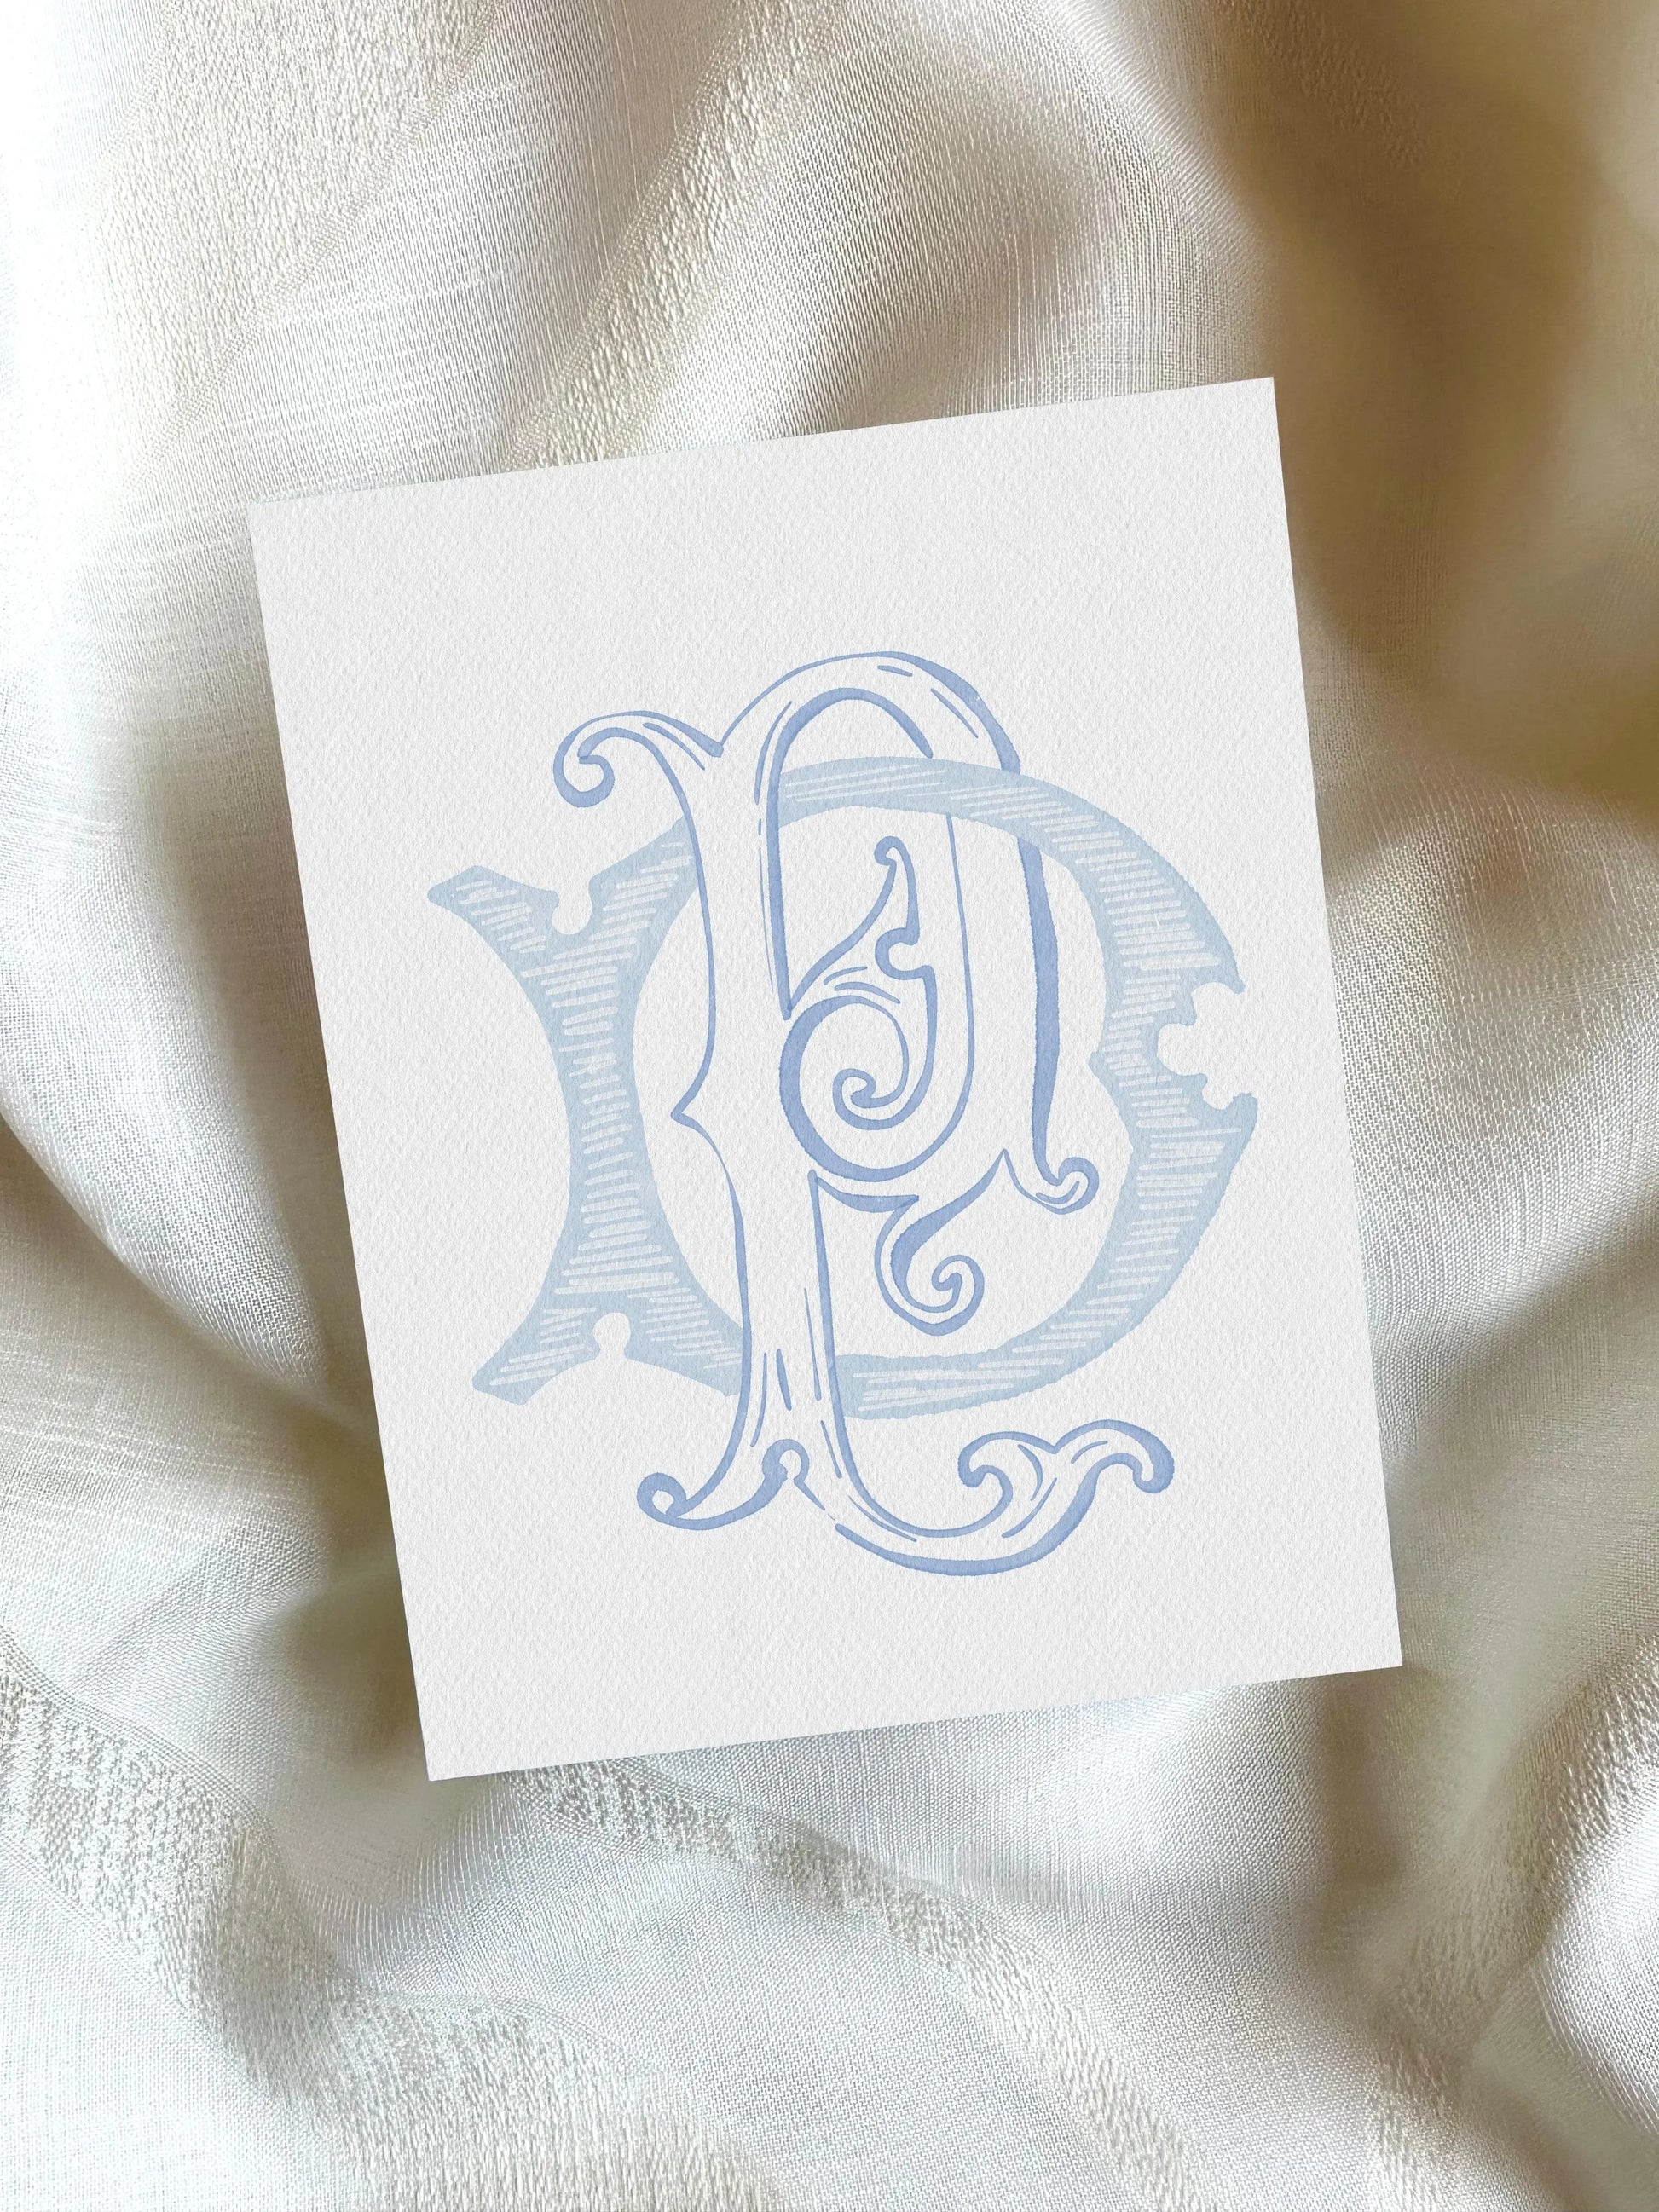 2 Letter Monogram with Letters DP | Digital Download - Wedding Monogram SVG, Personal Logo, Wedding Logo for Wedding Invitations The Wedding Crest Lab